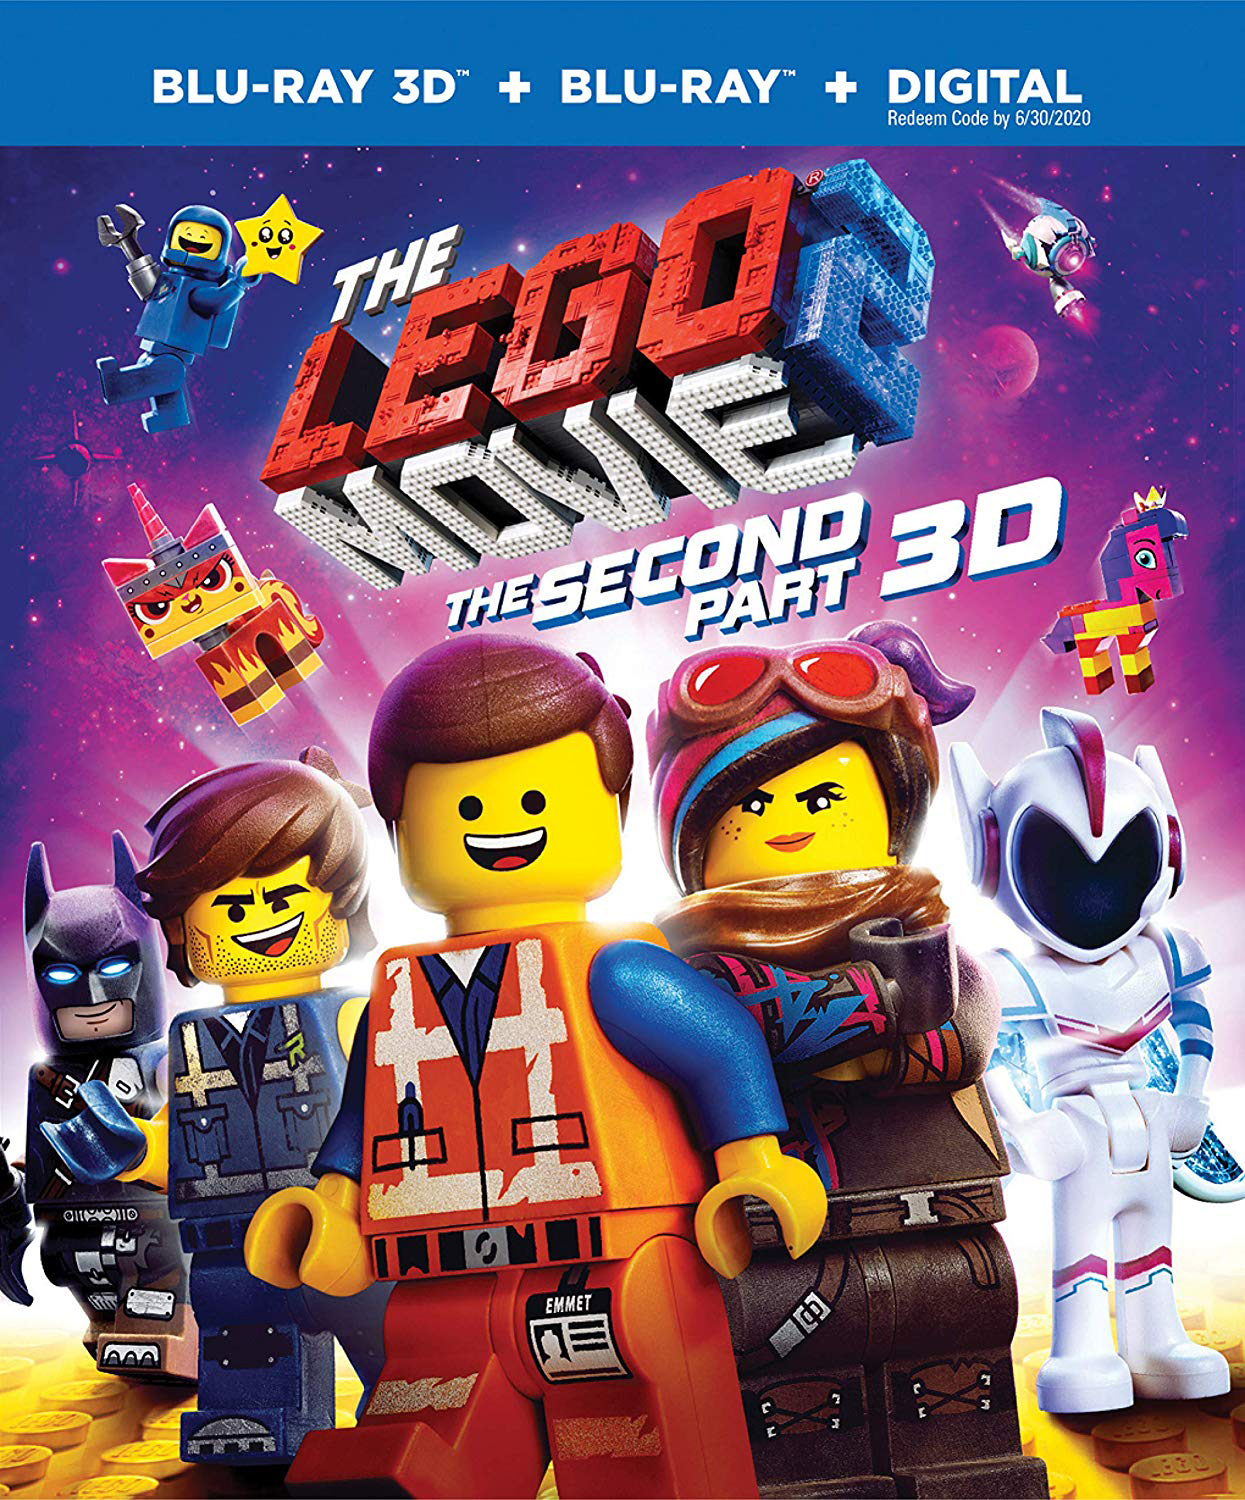 The LEGO Movie Second Part [3D] [Blu-ray] Digital Copy] [Blu-ray/Blu-ray 3D] [2019] - Best